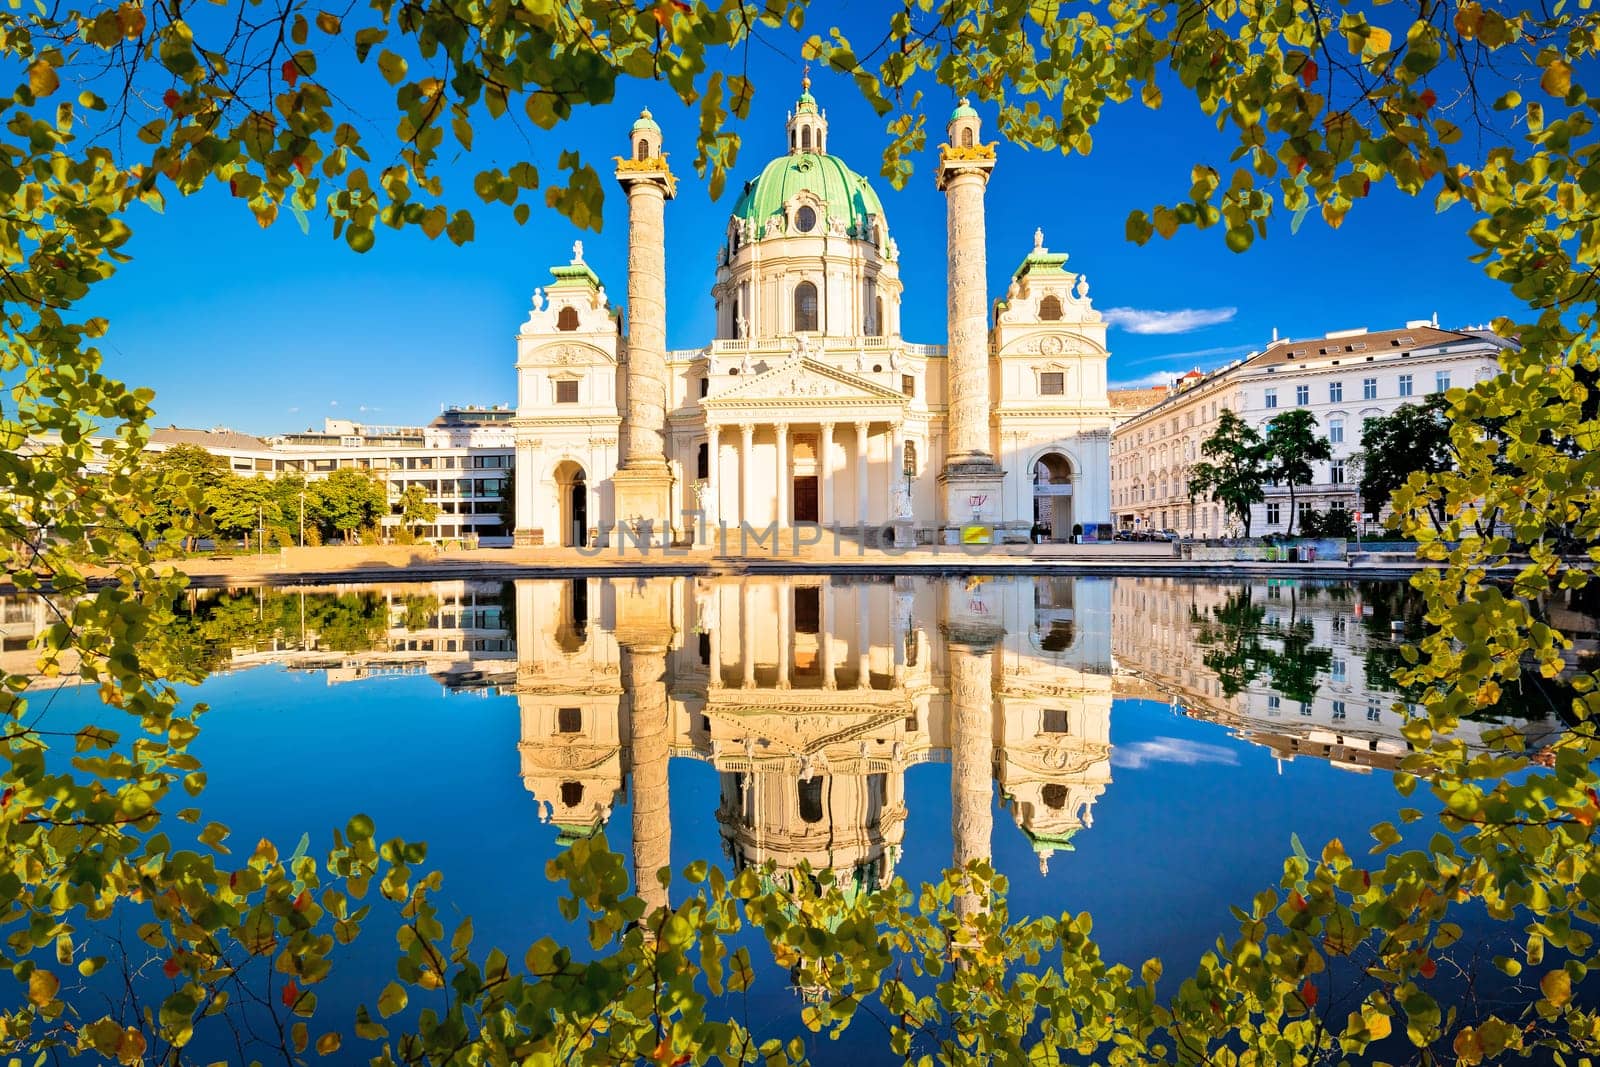 Karlskirche church of Vienna reflection view, capital of Austria